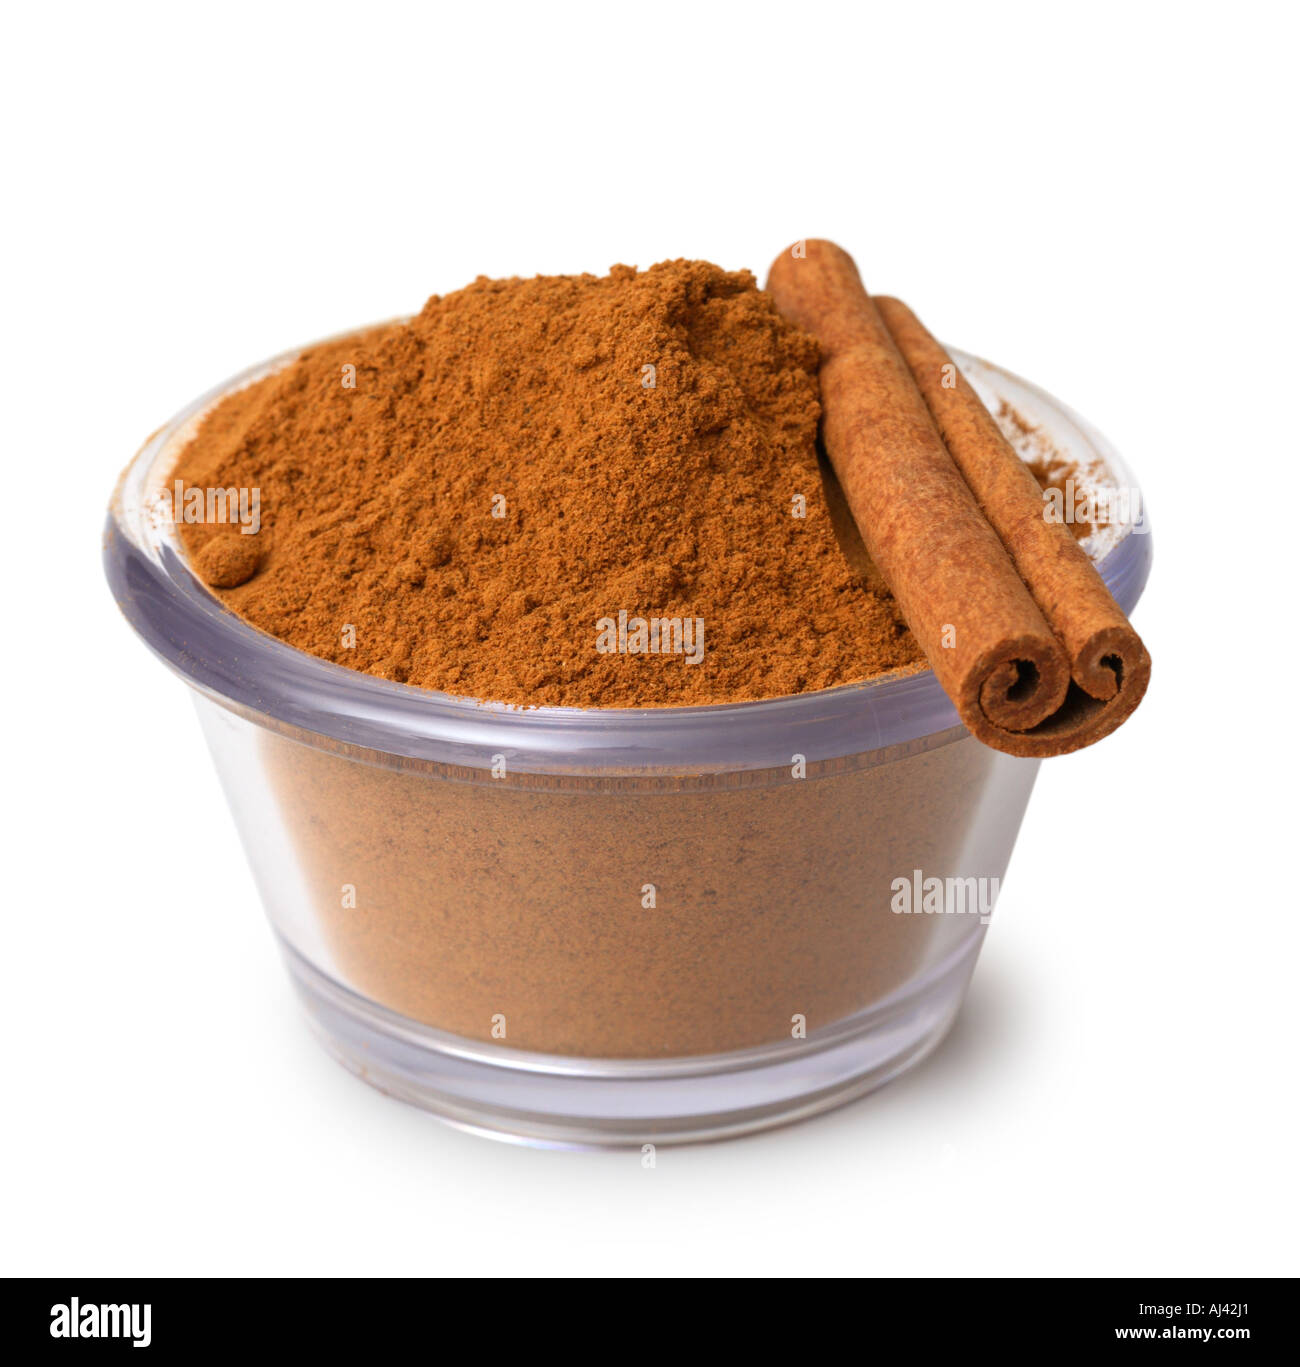 Dish of Ground Cinnamon with Cinnamon Stick Stock Photo